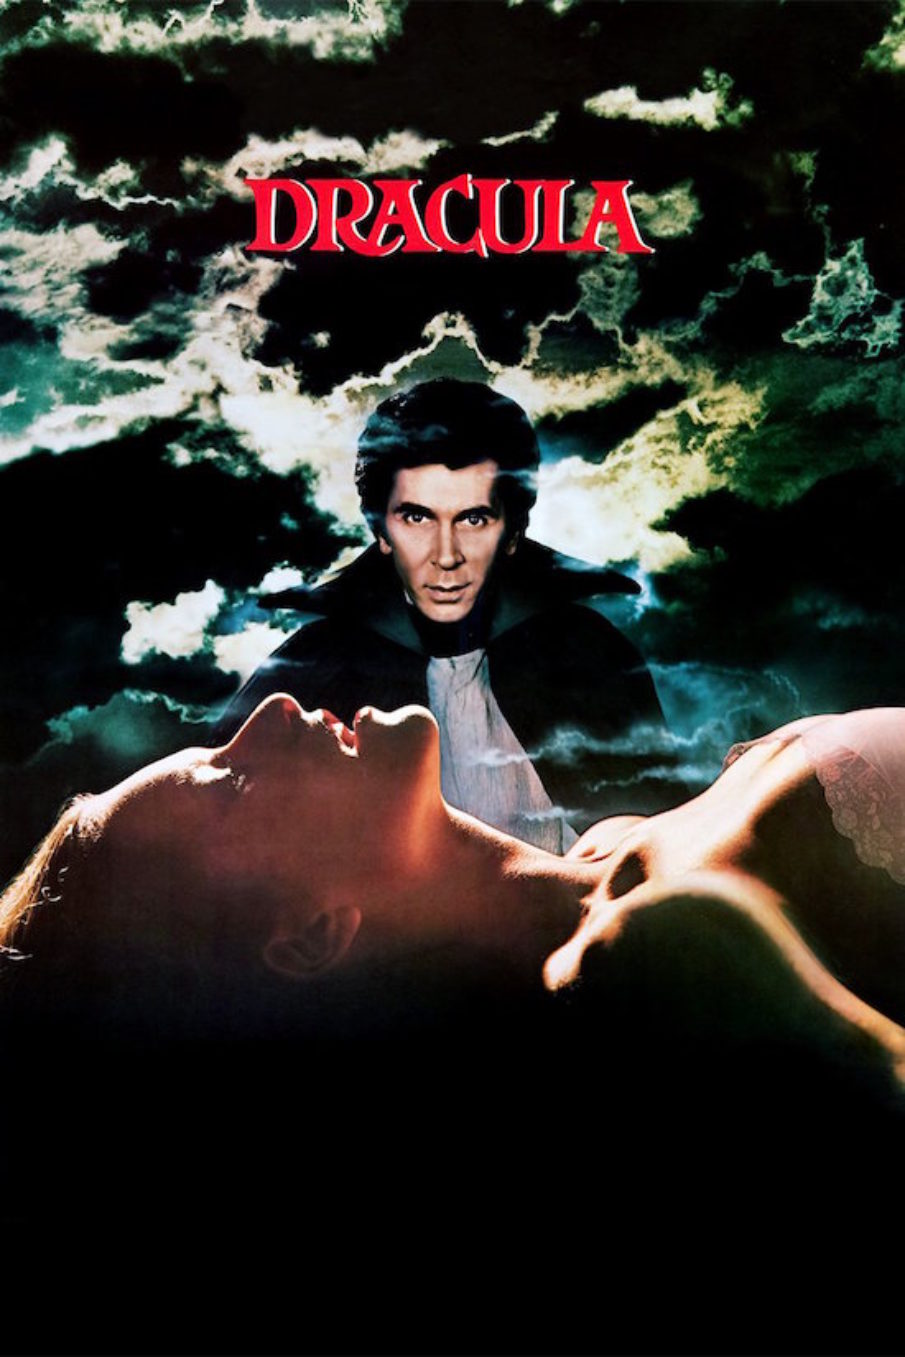 Dracula (1979) – 31 Days of Halloween